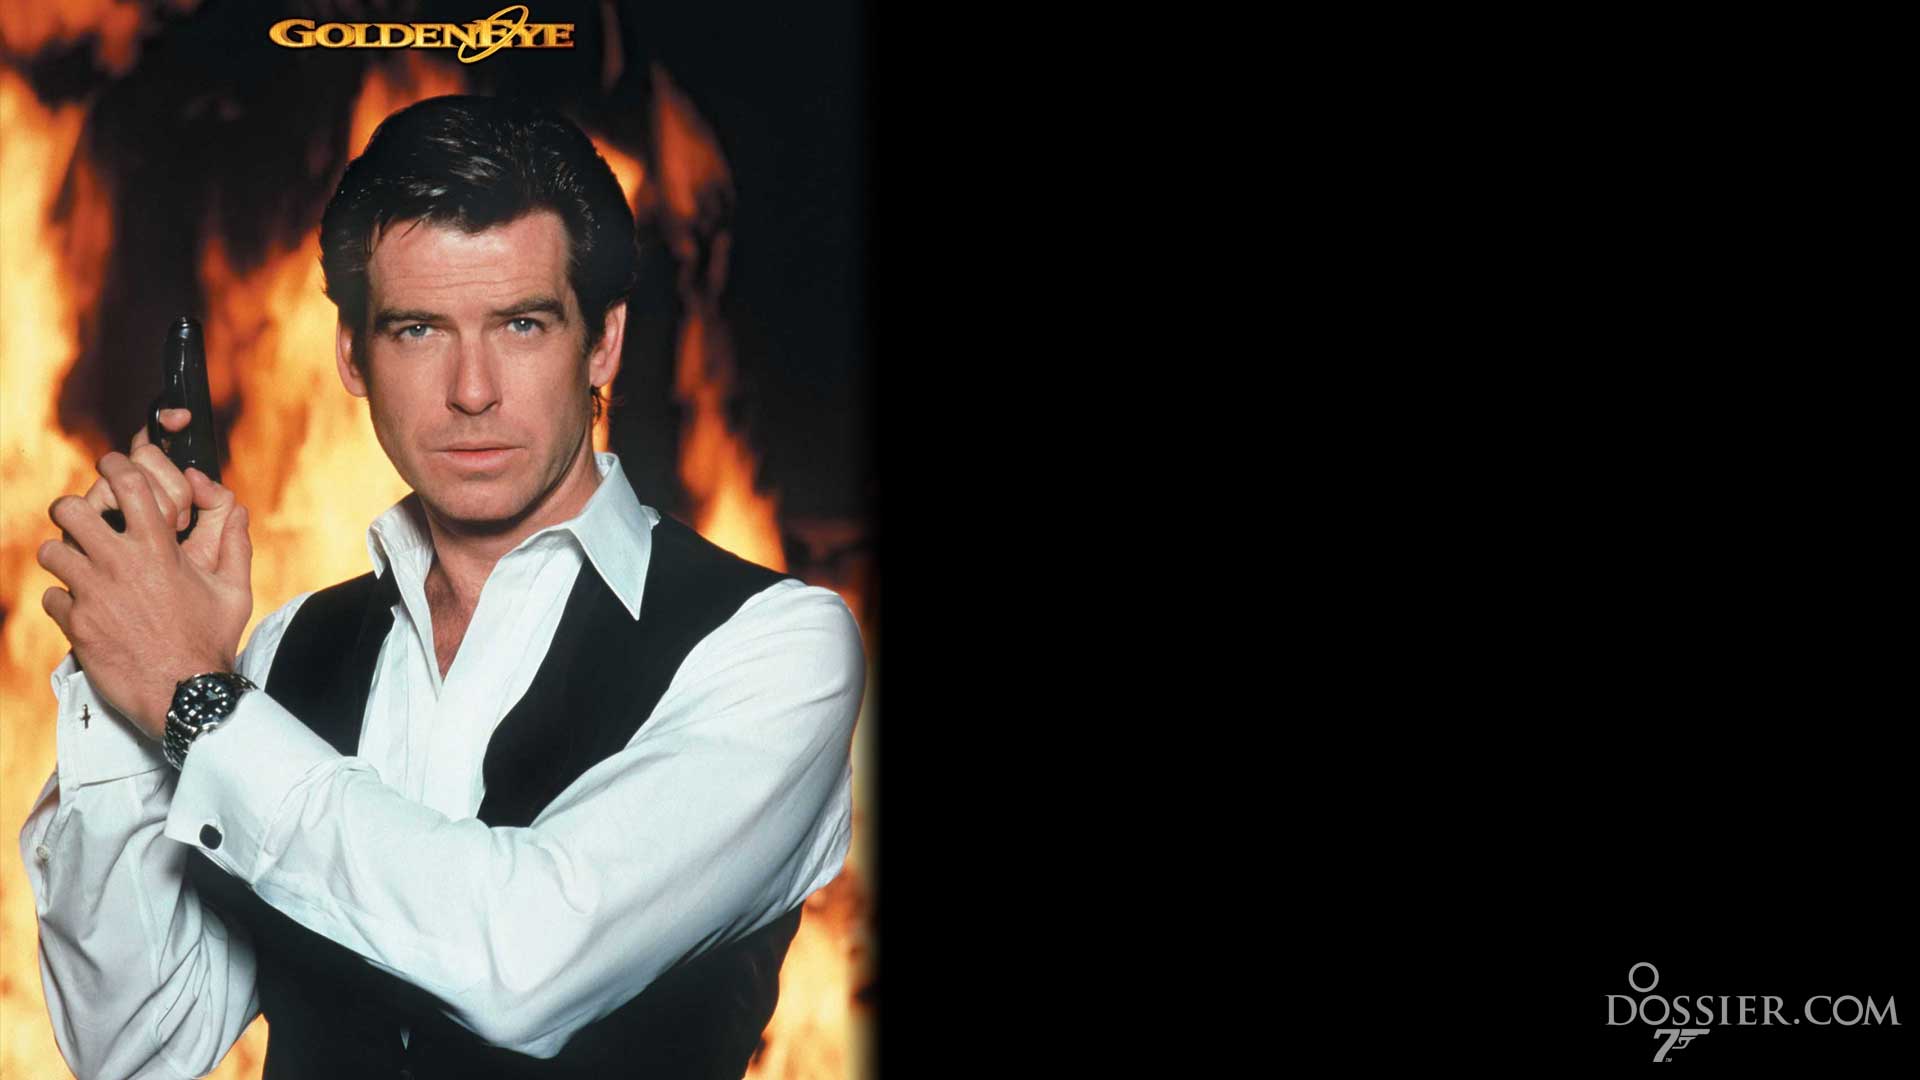 Goldeneye Pierce Brosnan James Bond